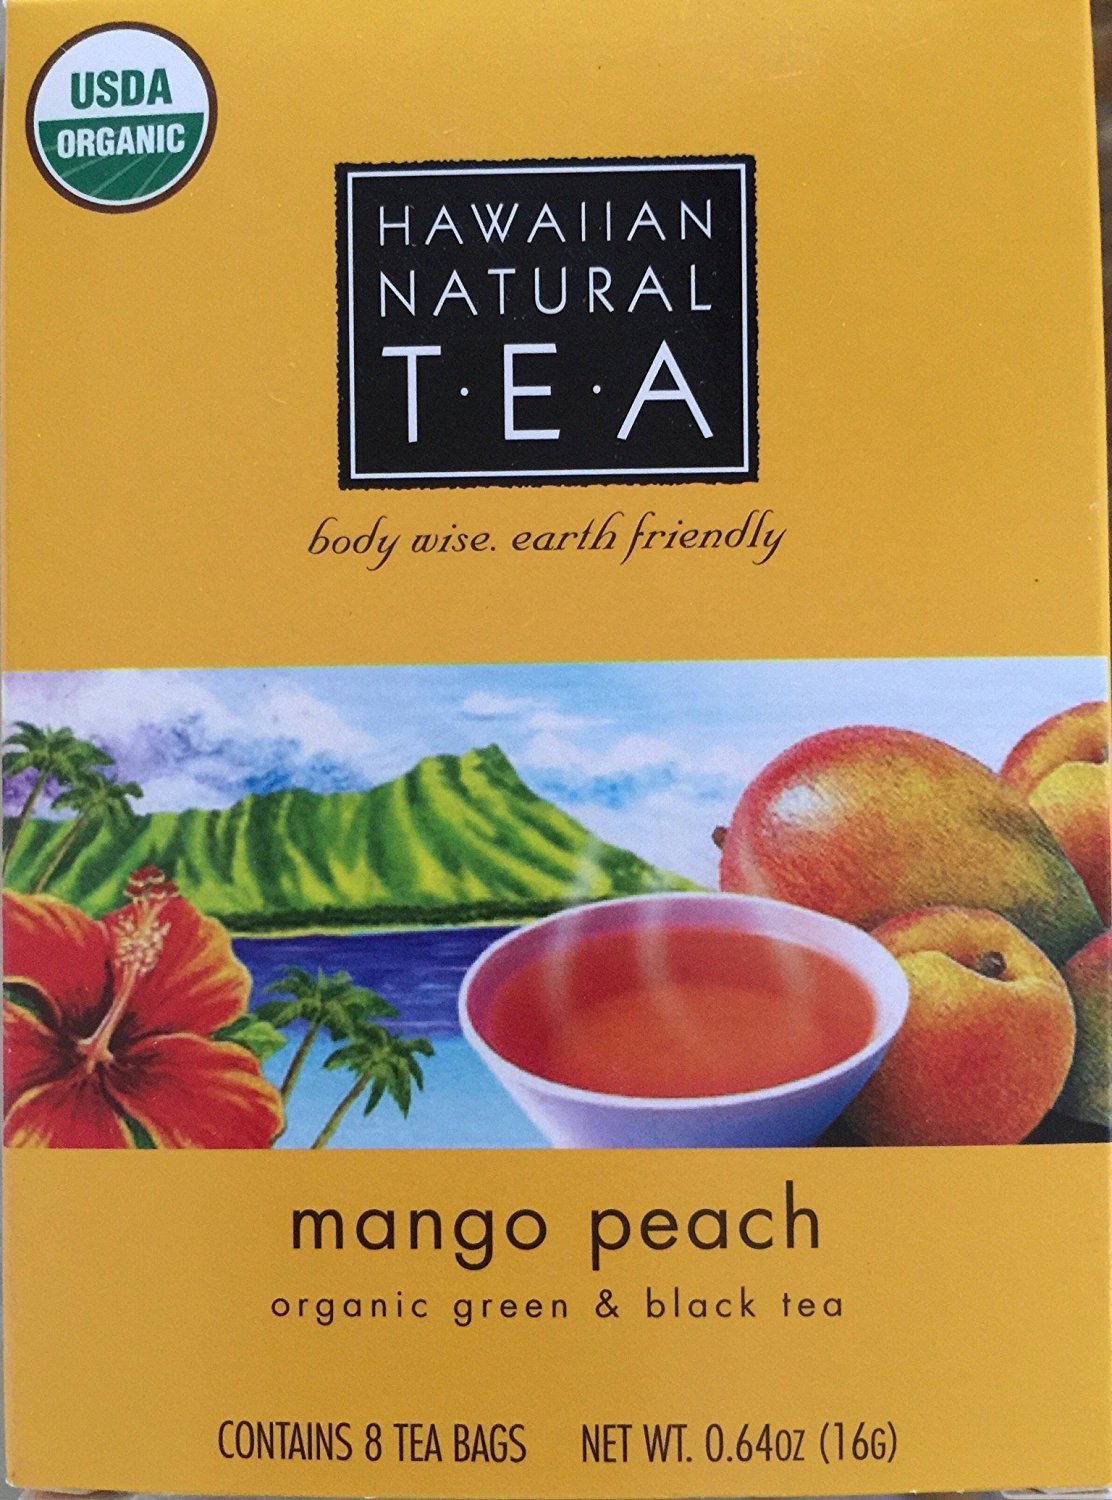 Primary image for Organic Hawaiian Natural Tea (Choose flavor)